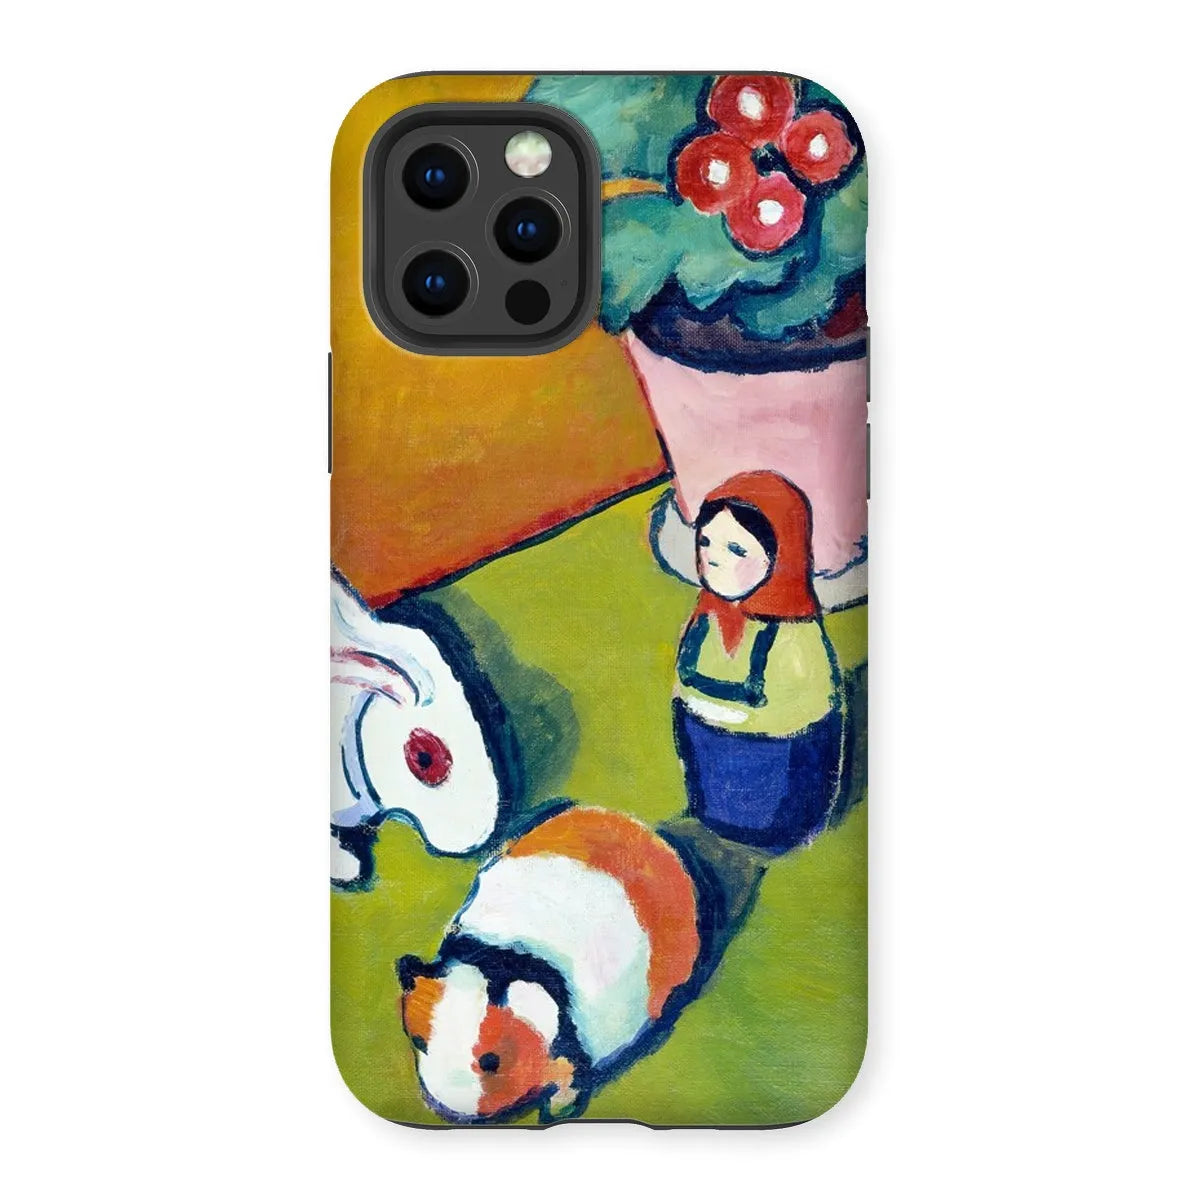 Little Walter’s Toys Art Phone Case - August Macke - Iphone 12 Pro / Matte - Mobile Phone Cases - Aesthetic Art